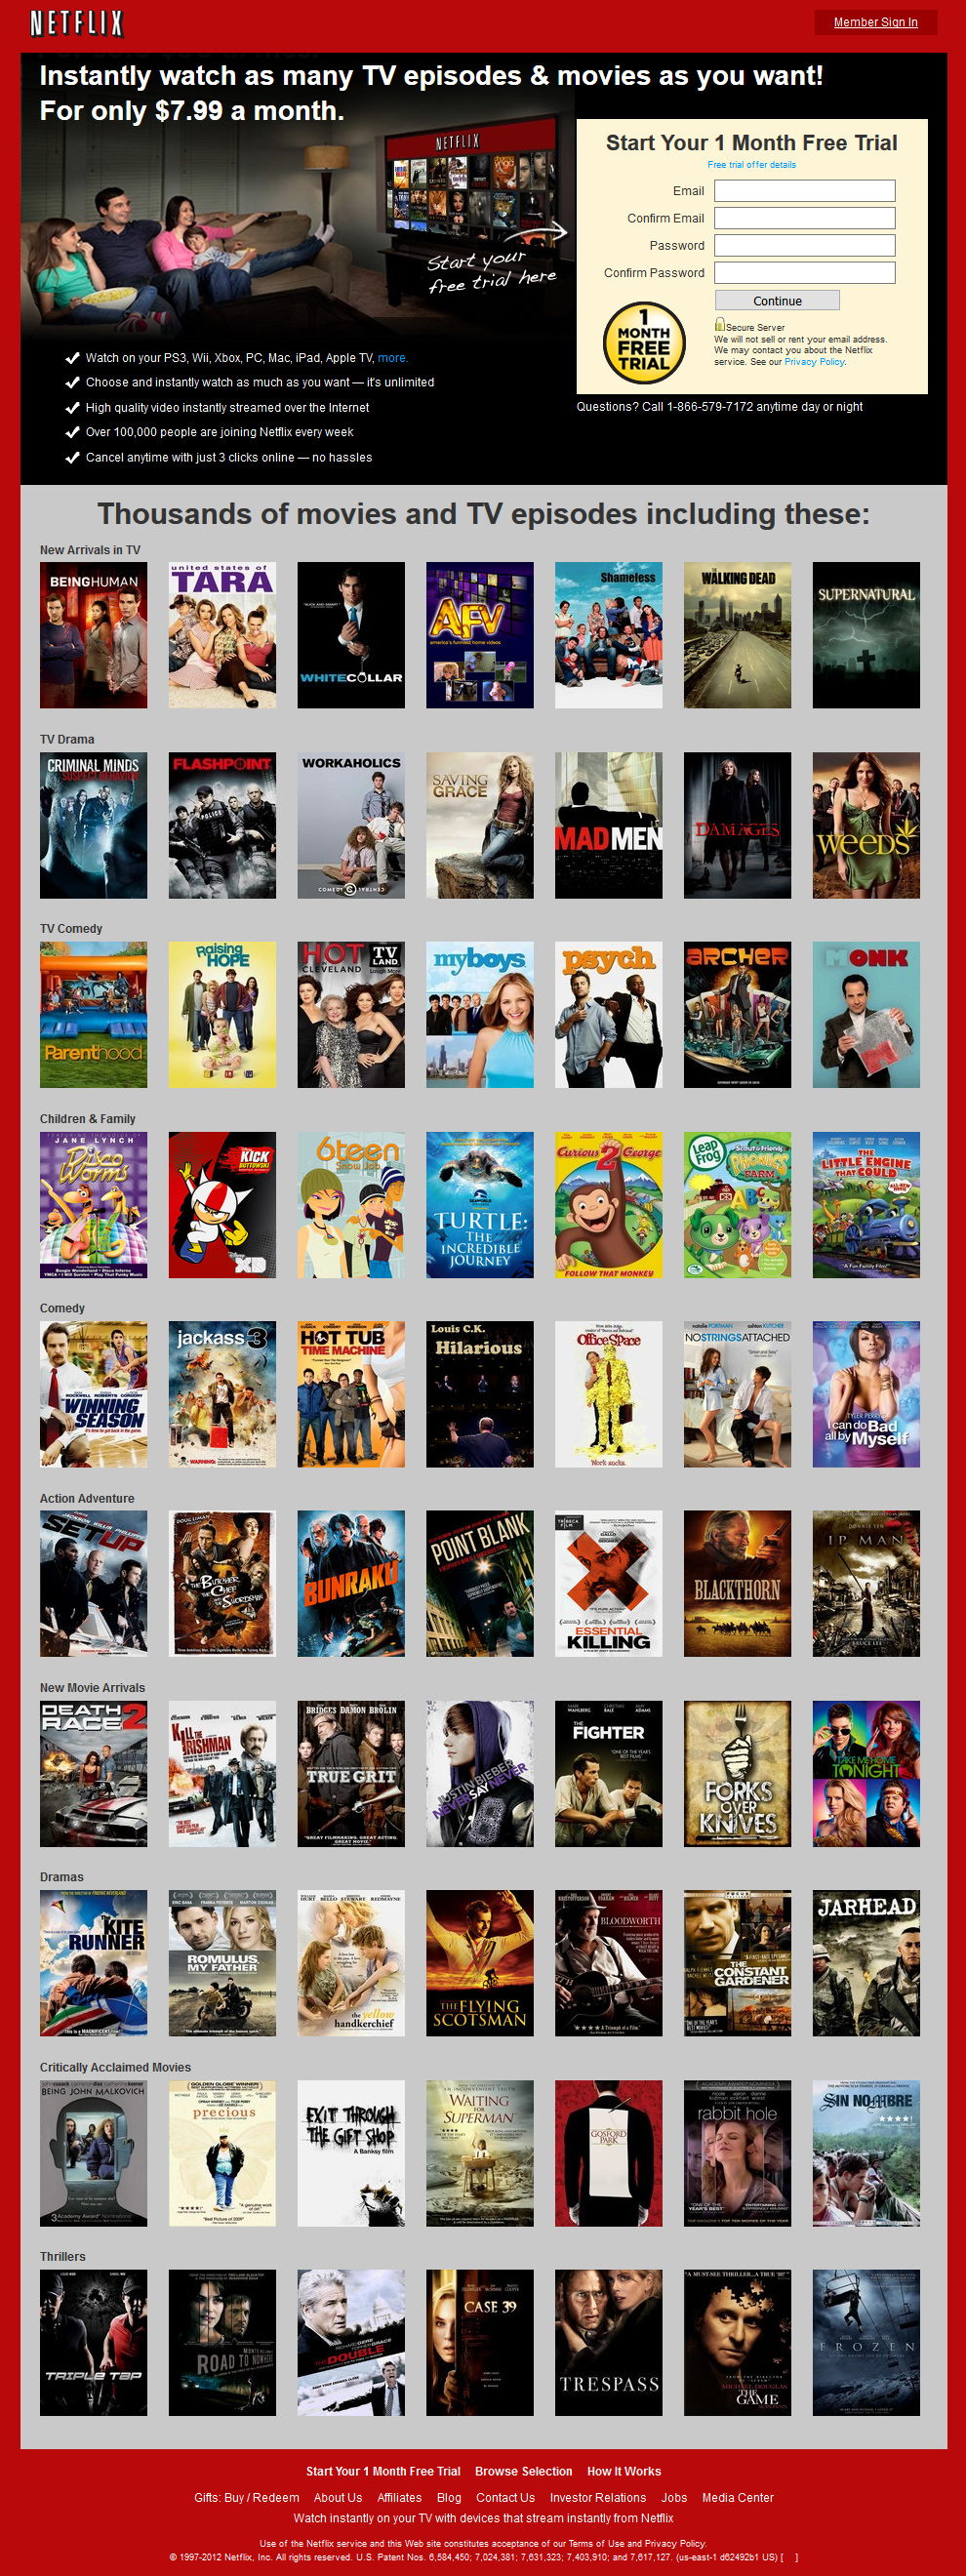 Netflix in 2012